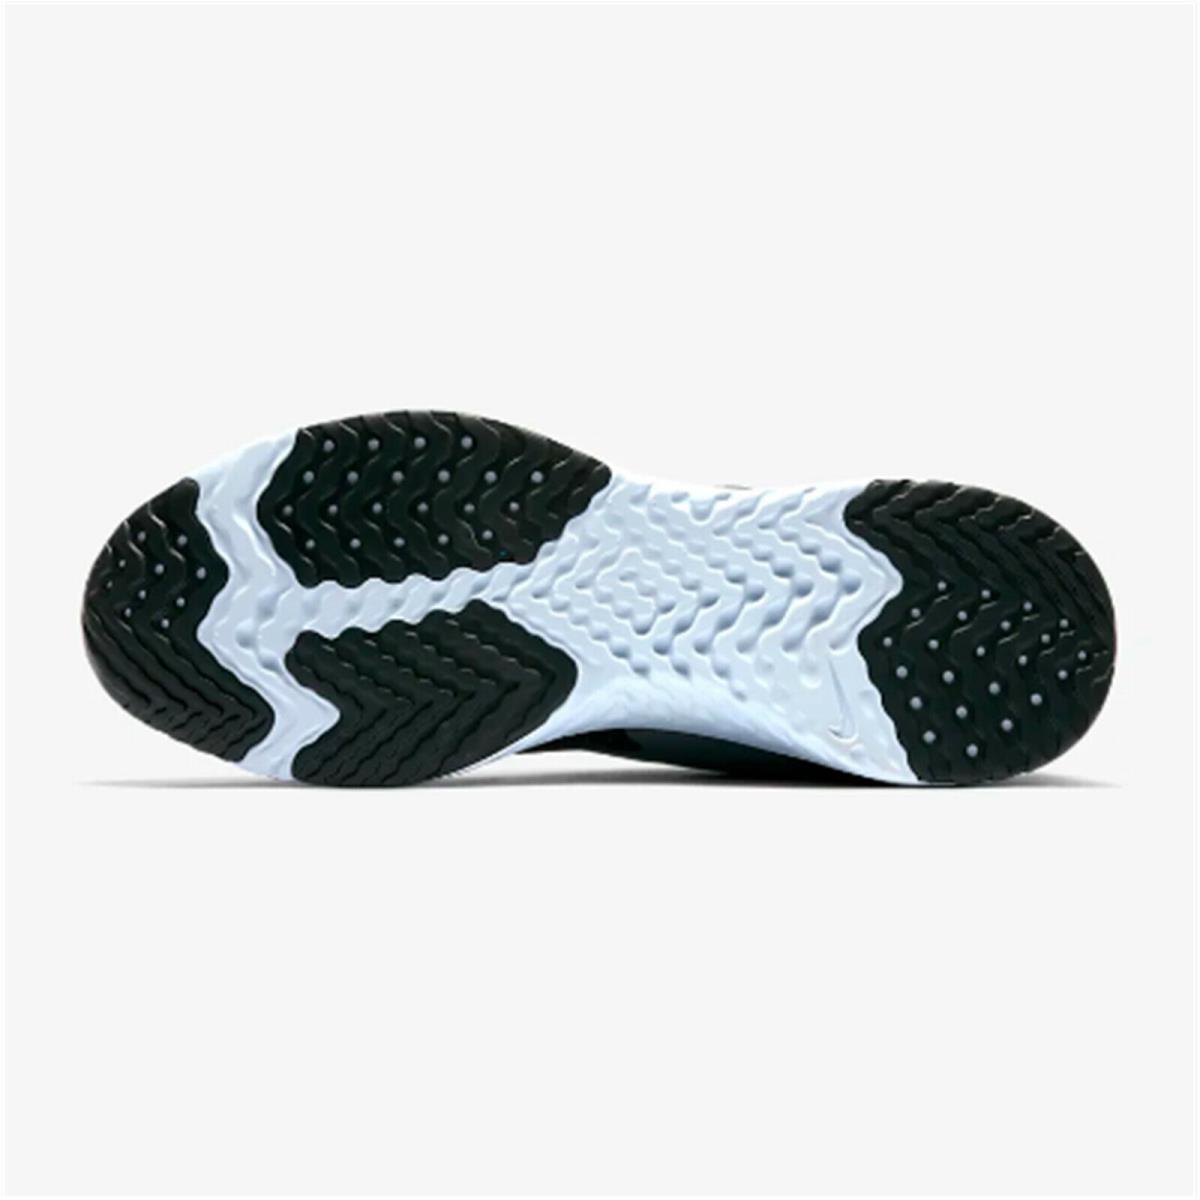 Nike shoes Odyssey React Flyknit - THUNDER GREY/LIGHT BLUE-BLACK , THUNDER GREY/LIGHT BLUE-BLACK Manufacturer 5